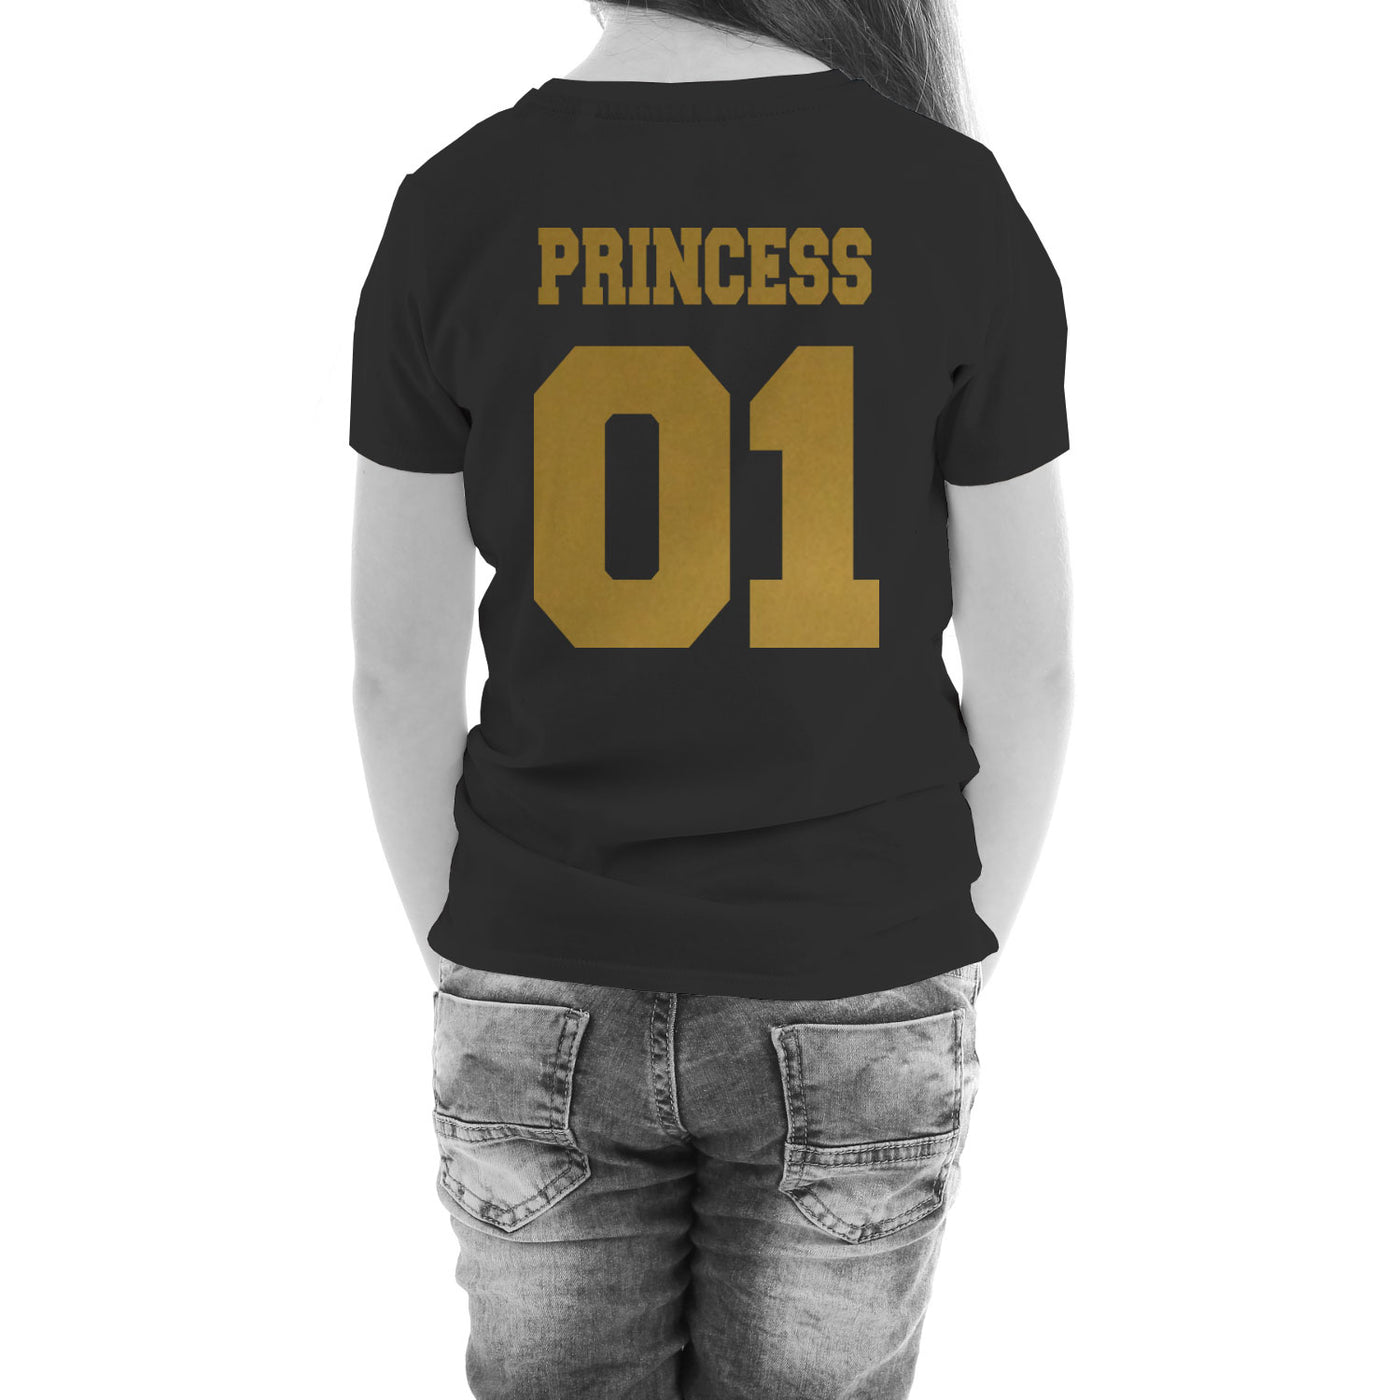 princess-01-gold5978ab6b1cbdf